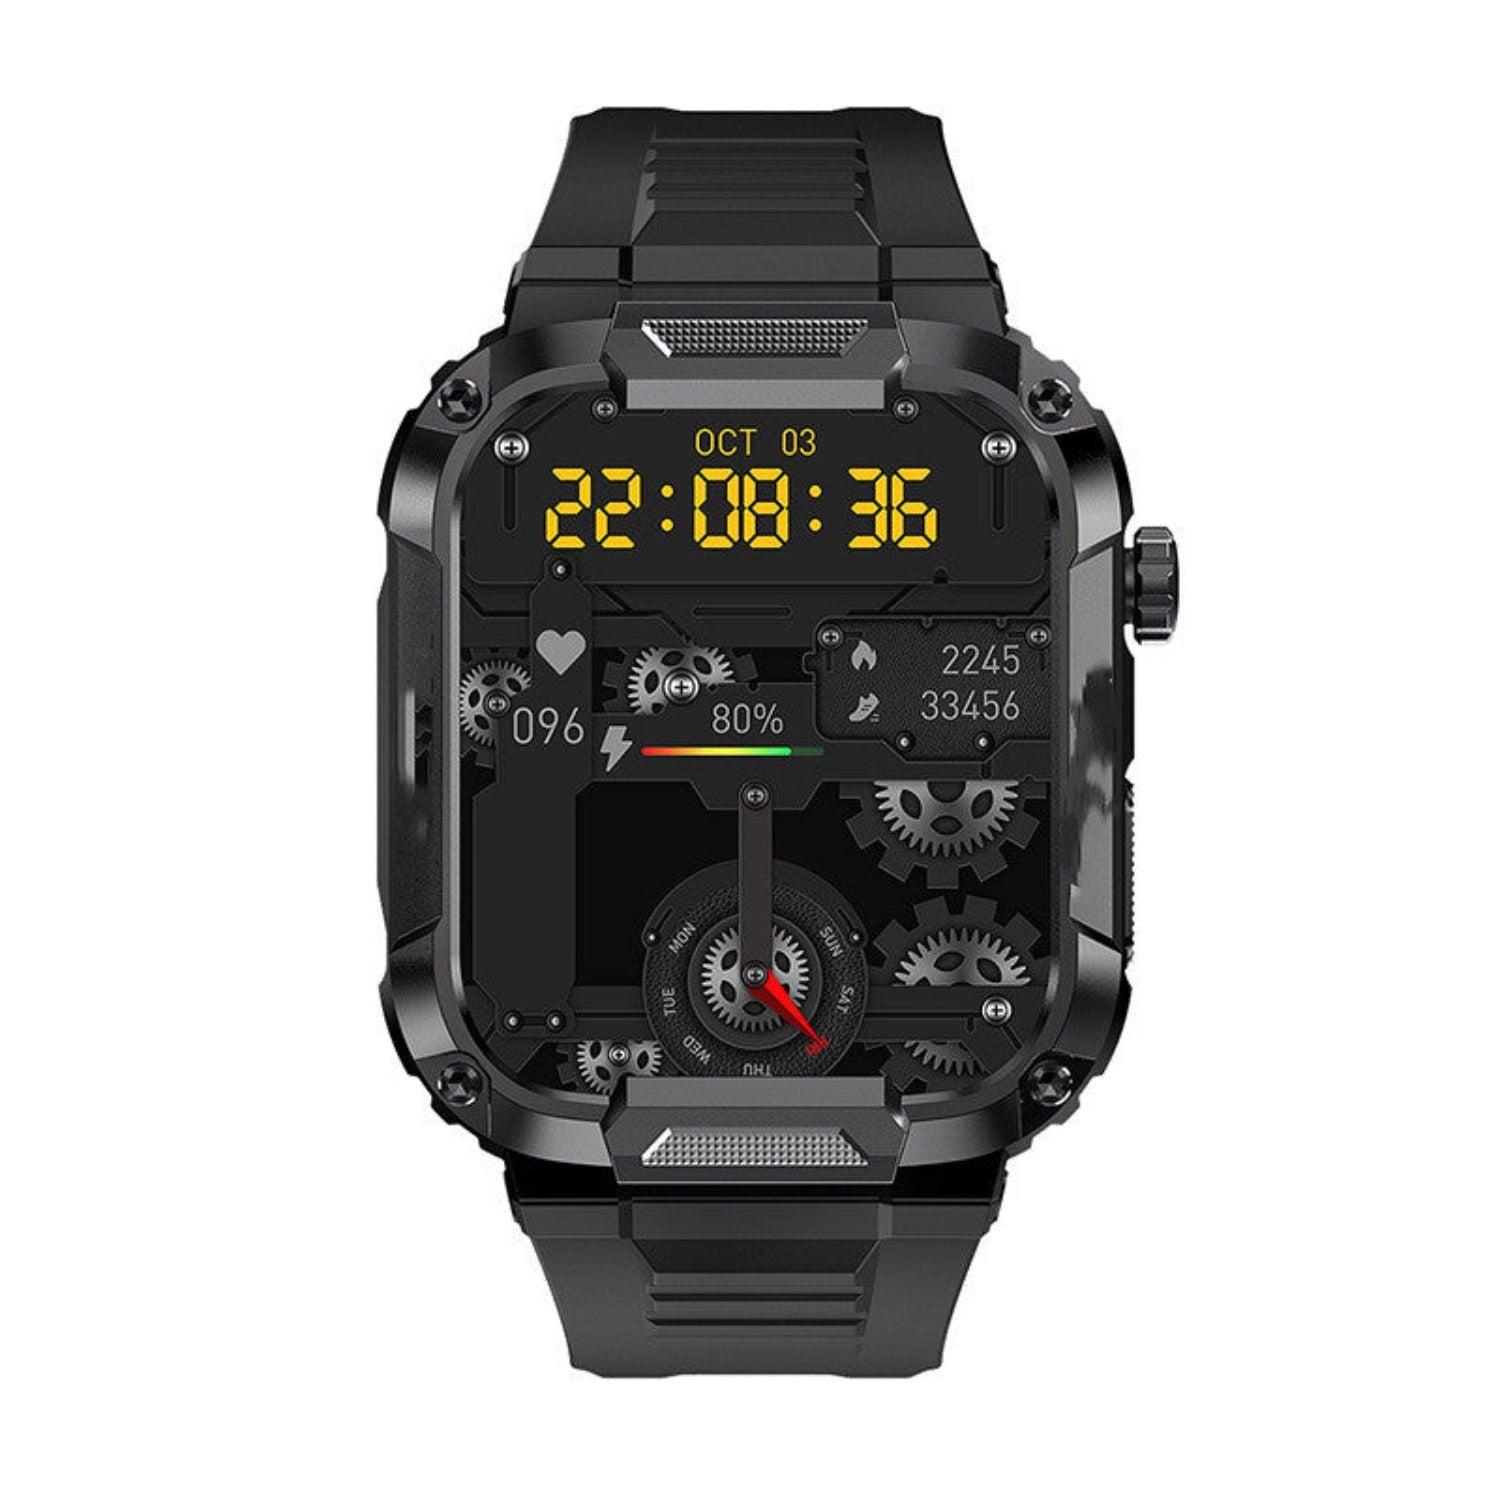 MK66 Smart Watch: Bluetooth Calling, 400mAh Long-lasting Battery, & More! LA ROSE BEAUTY